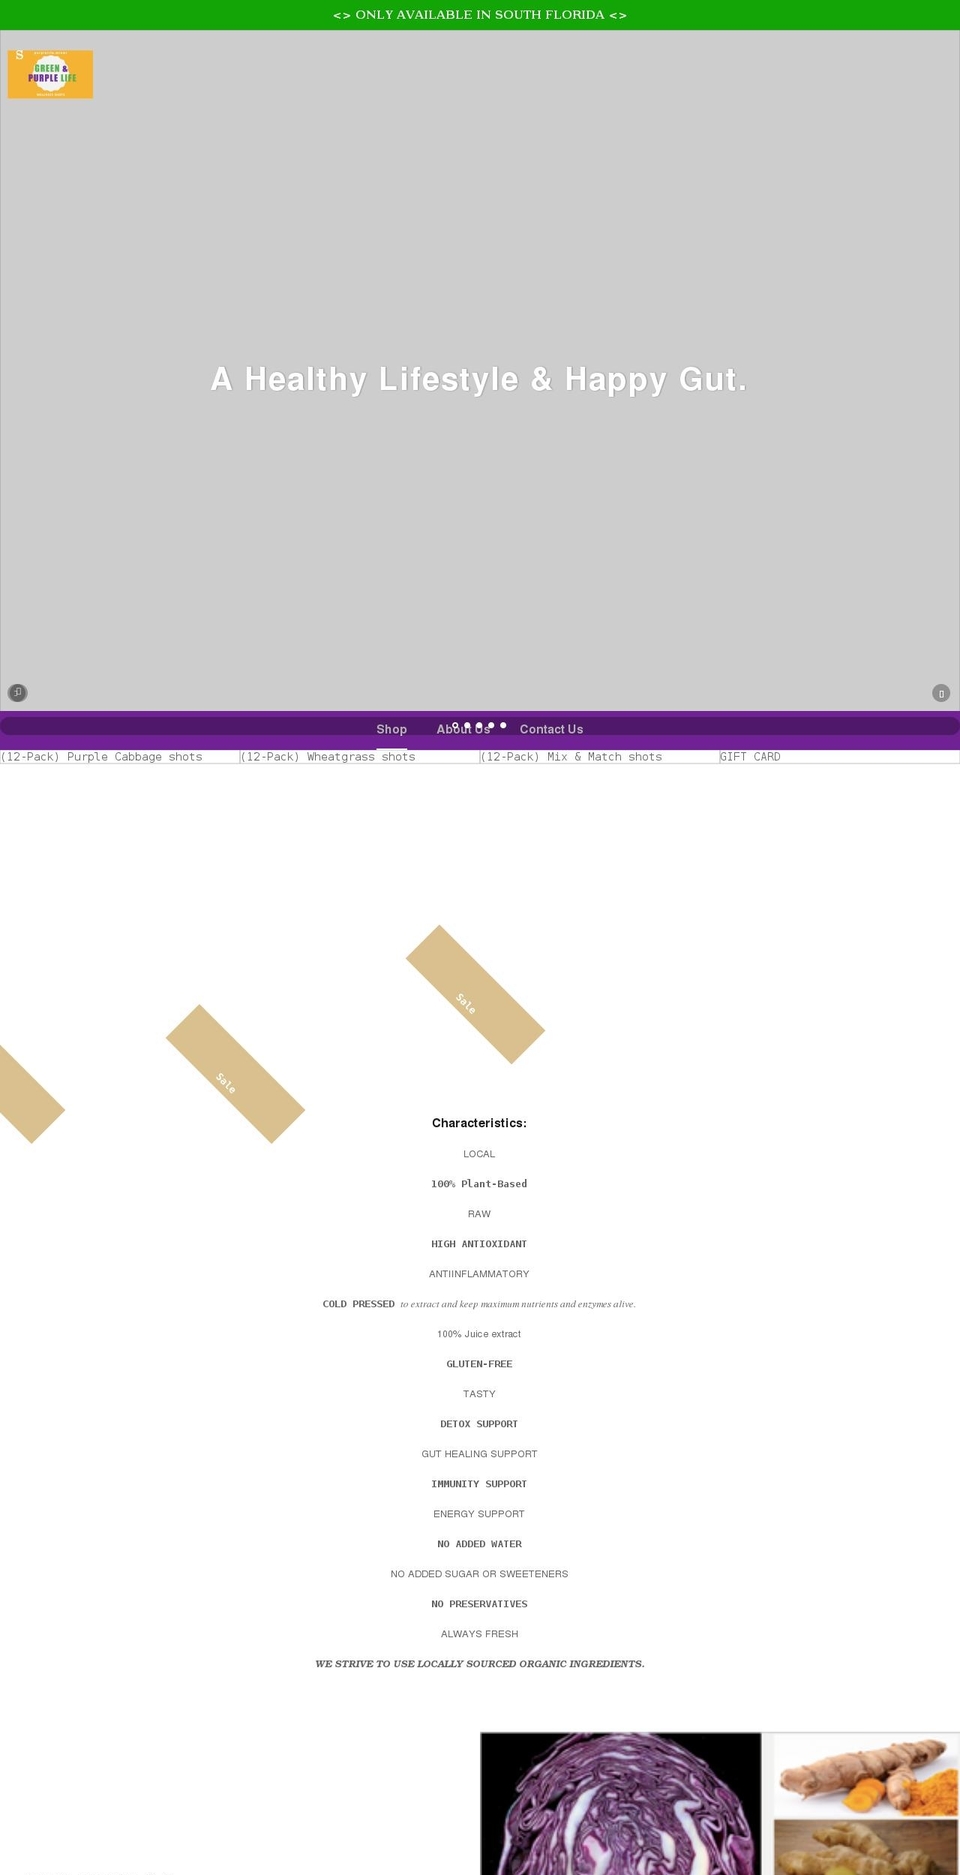 purplelife.miami shopify website screenshot